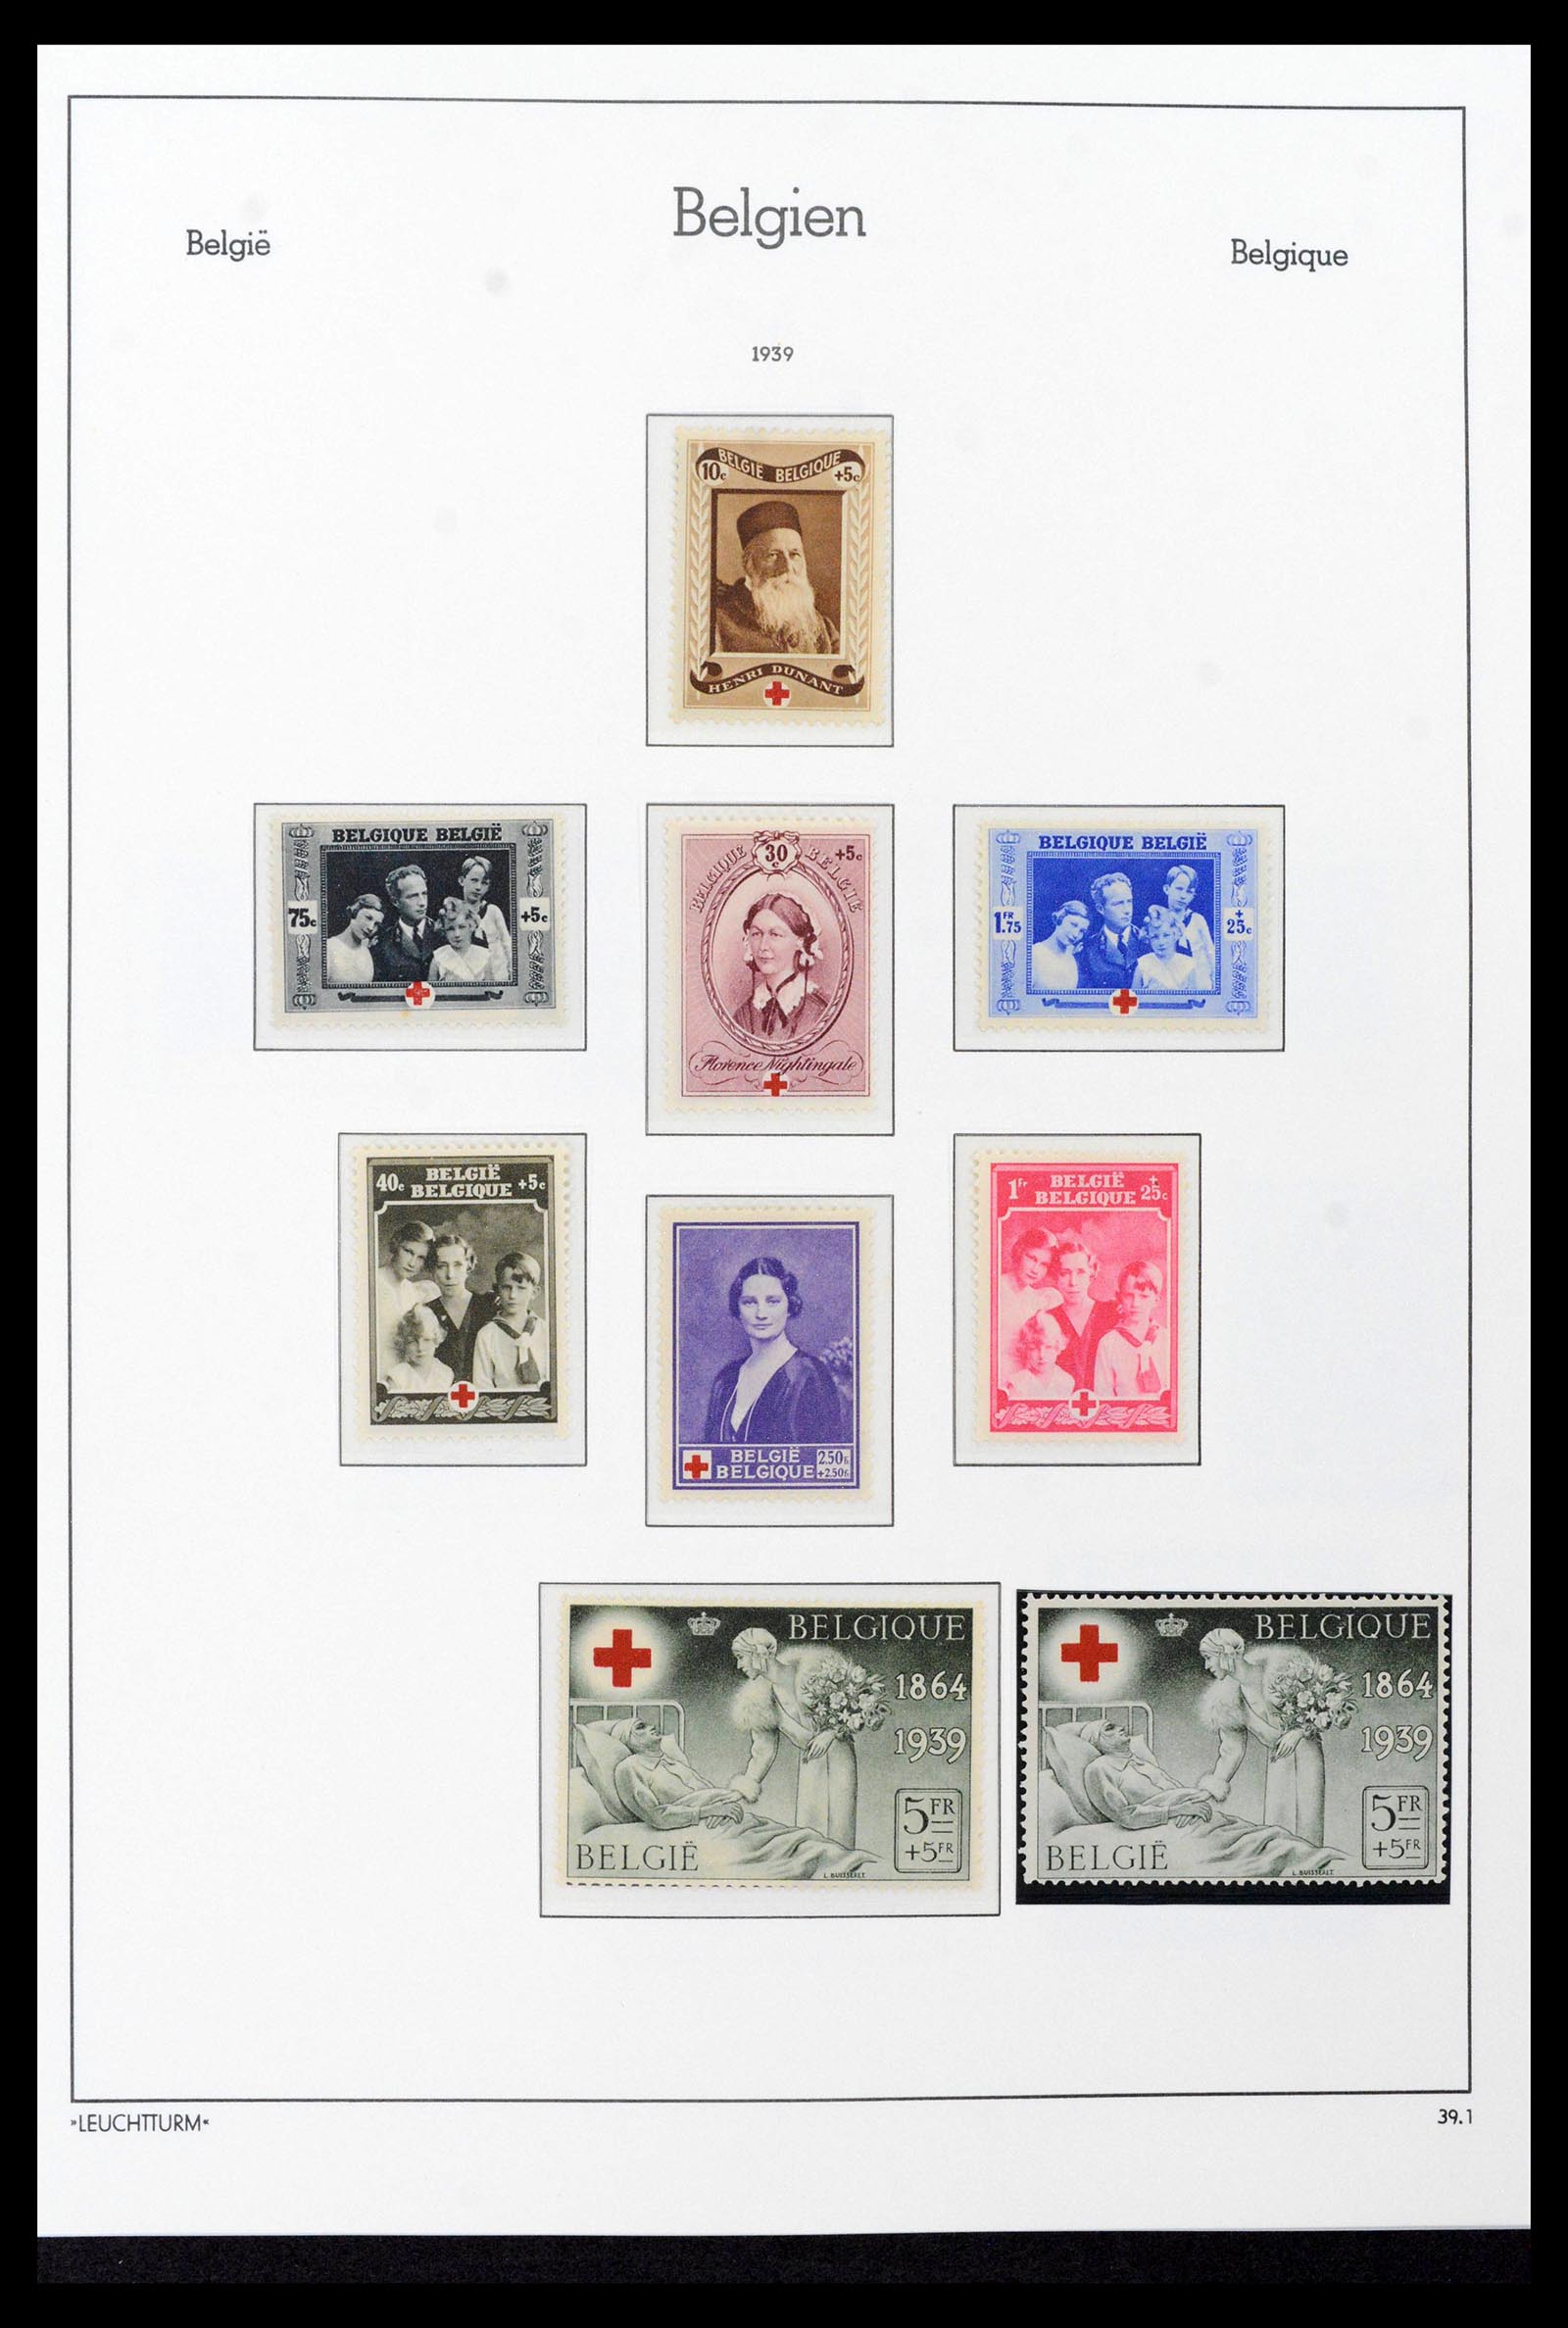 39137 0070 - Stamp collection 39137 Belgium 1849-2002.